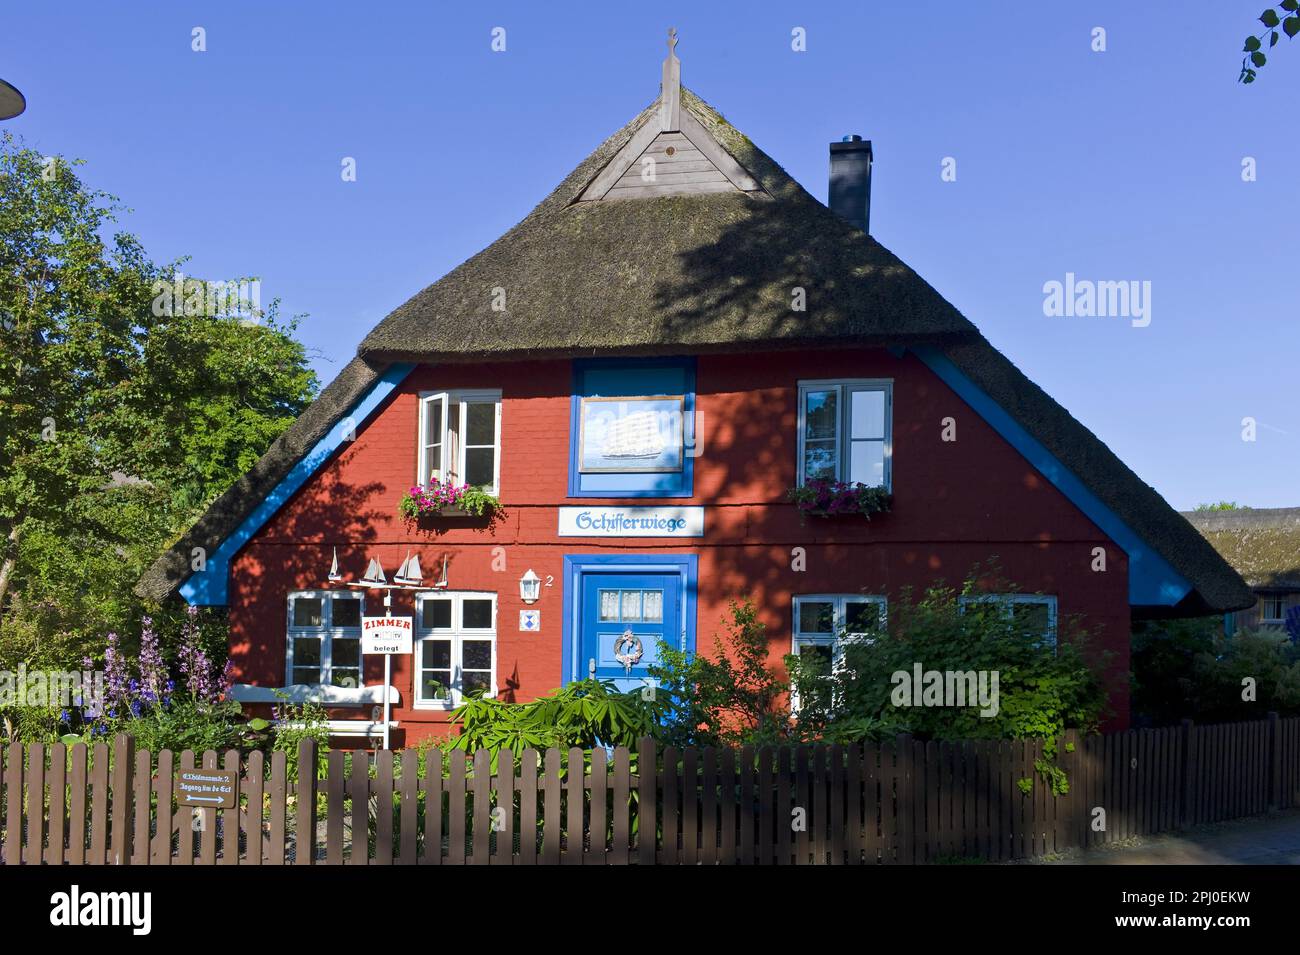 Thatched-roof house Schifferwiege in Wustrow Fischland, Mecklenburg-Western  Pomerania, Ribnitz Damgarten district, Germany Stock Photo - Alamy